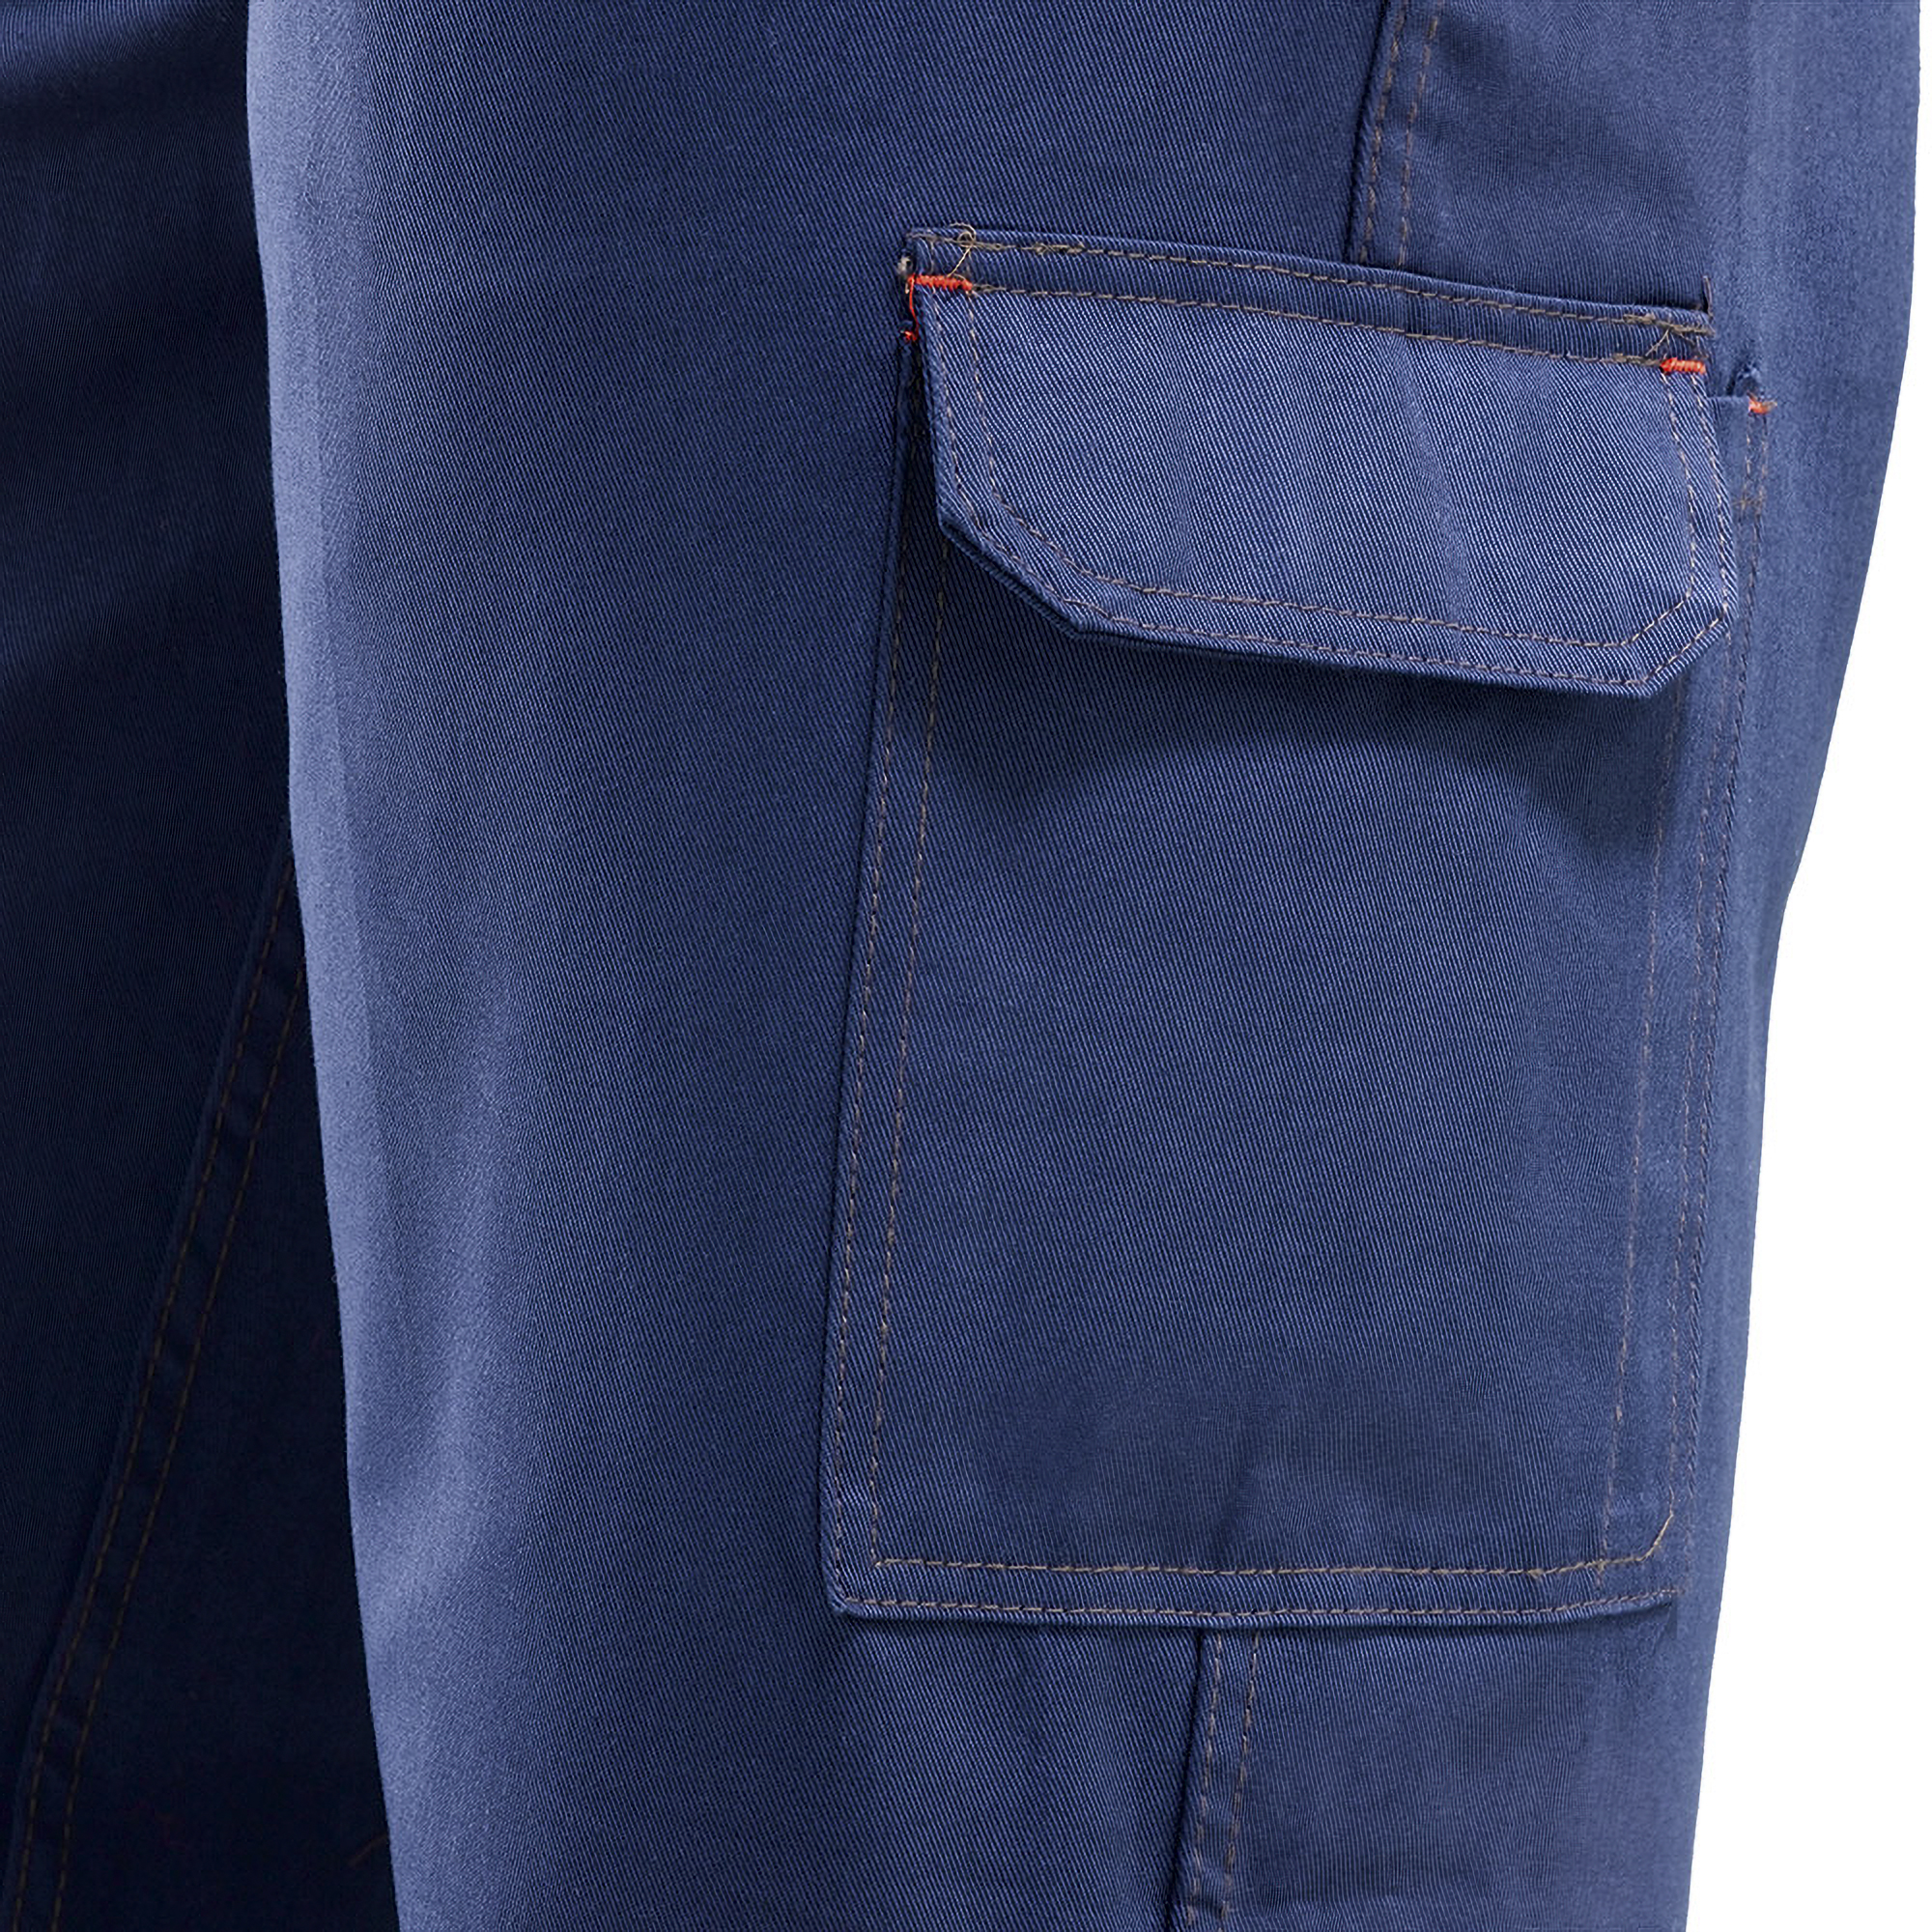 Pantaloni Neri Spa Super Blu Cargo 435225, la vera garanzia